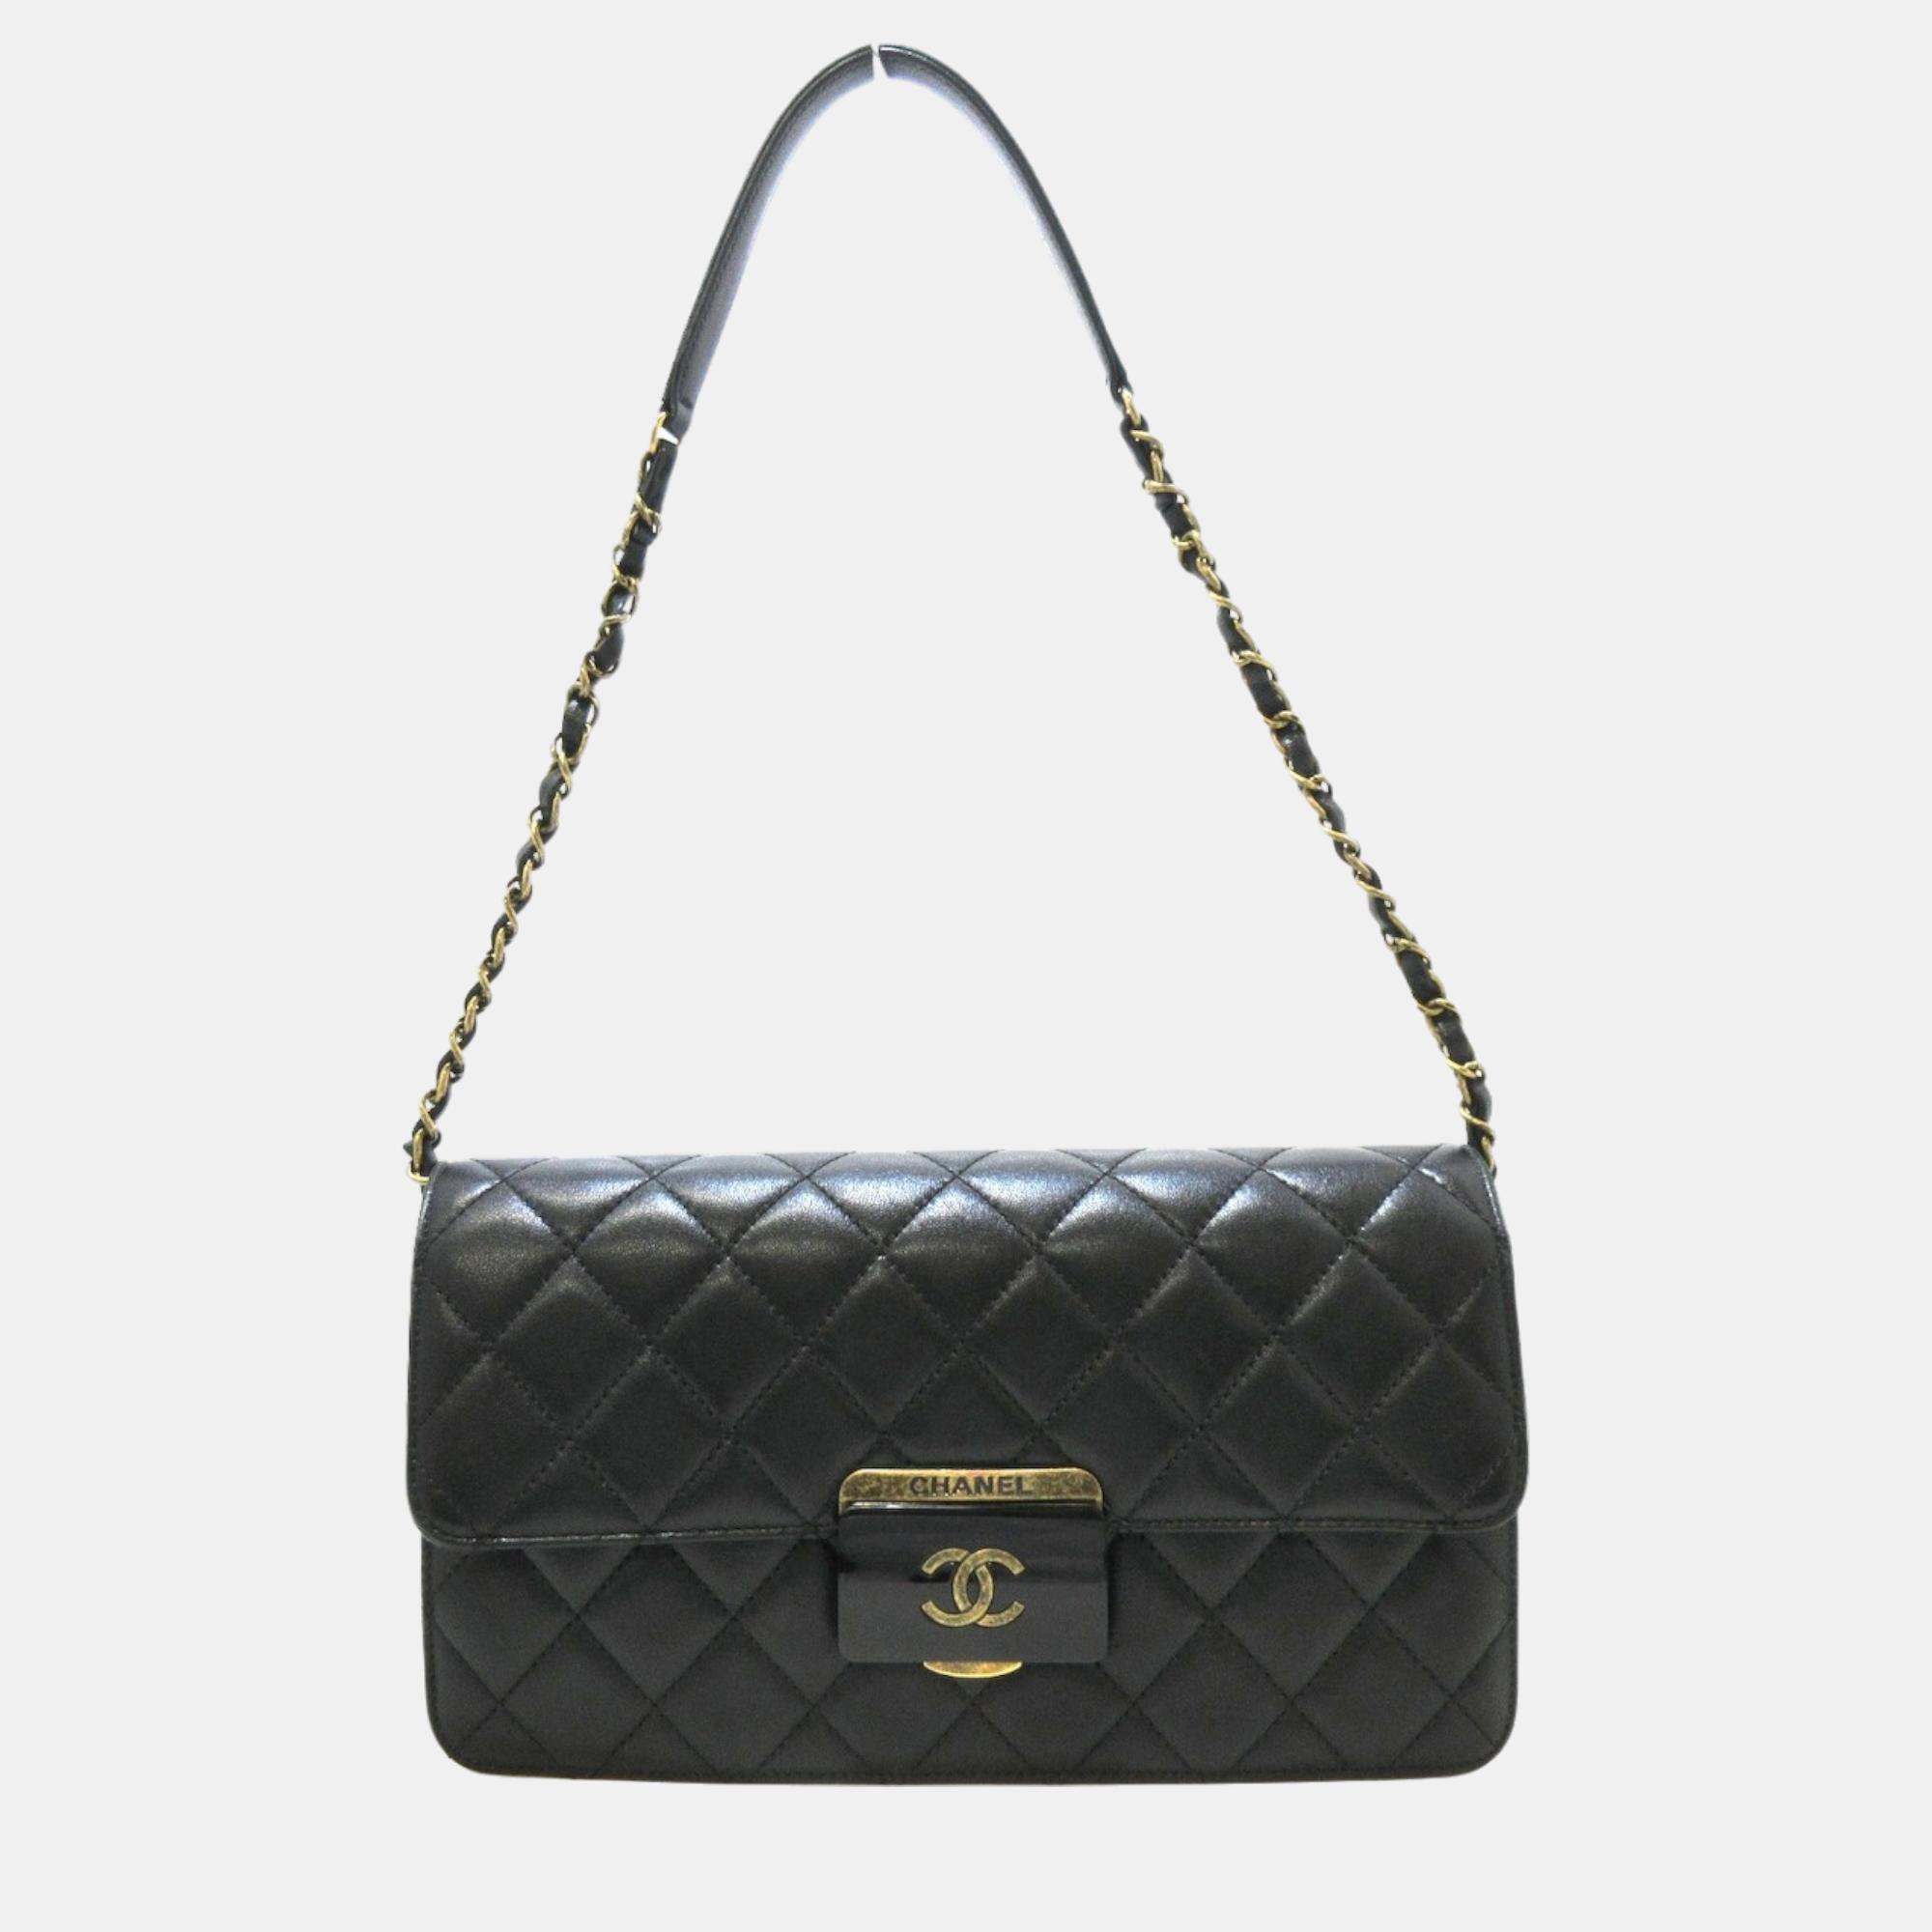 Chanel Black Leather CC Beauty Lock Shoulder Bag